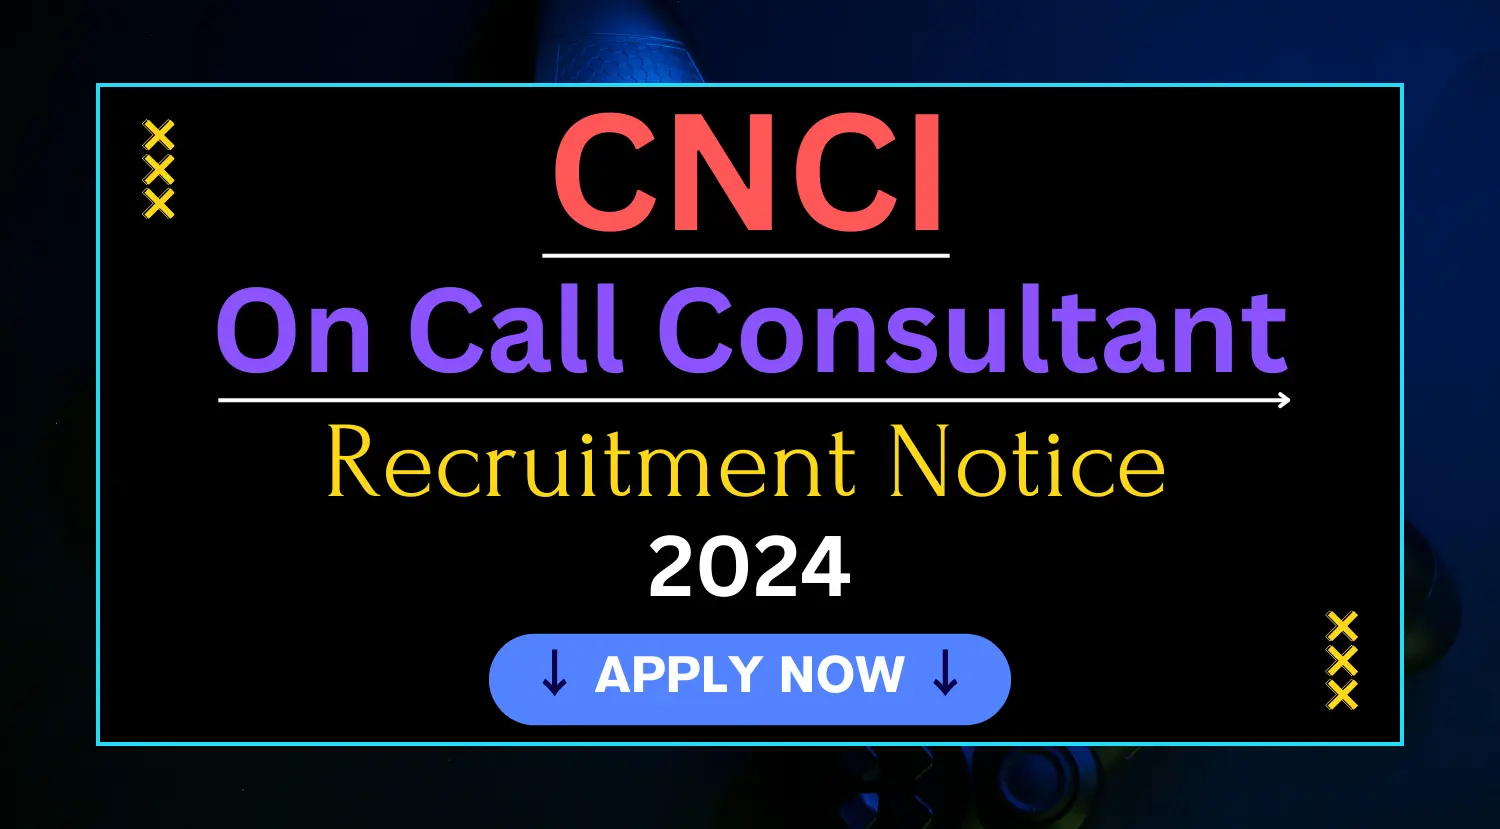 CNCI On Call Consultant Recruitment 2024